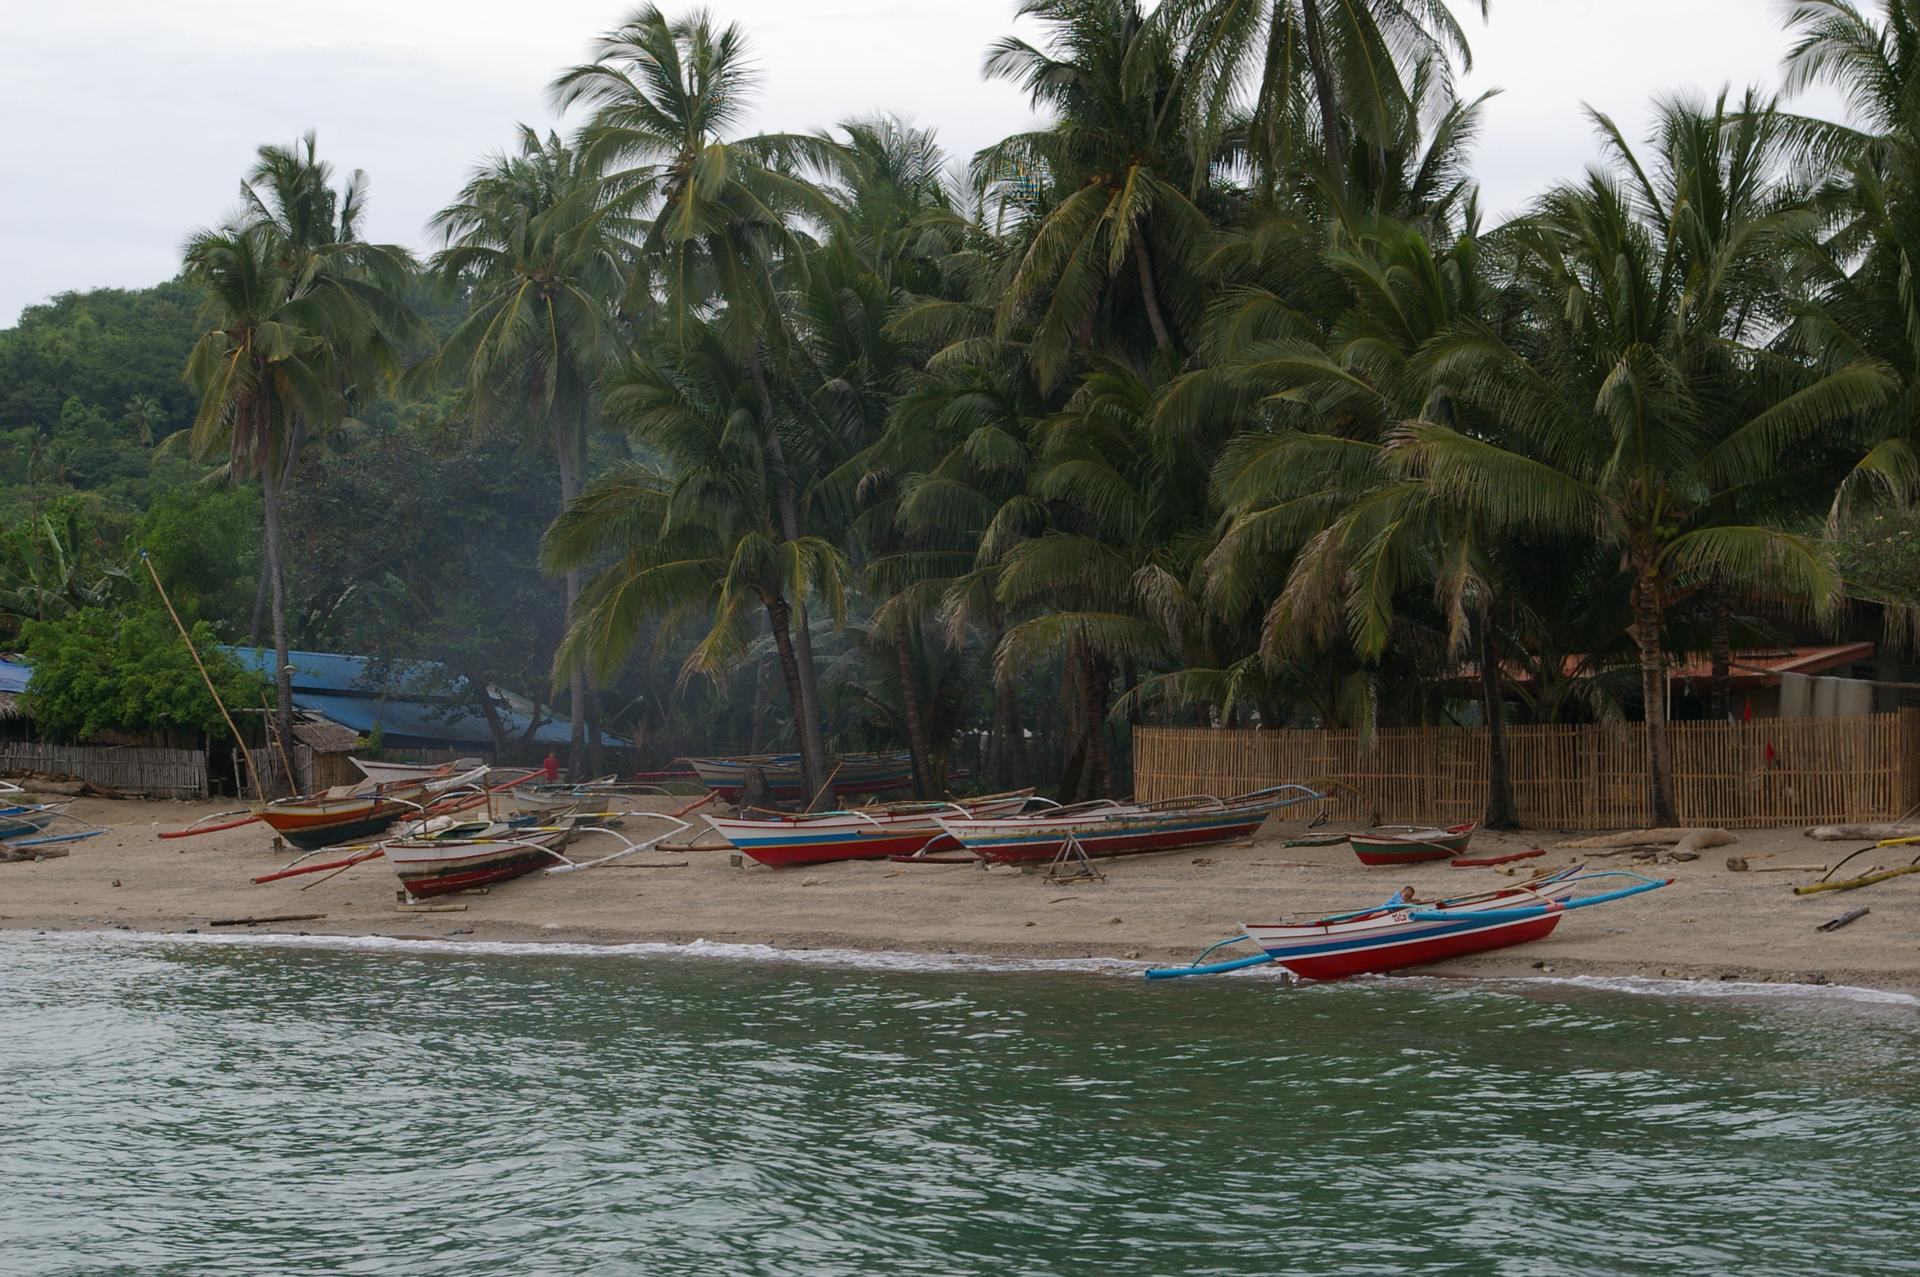 The islands of the Visayas region were impacted by Typhoon Haiyan.